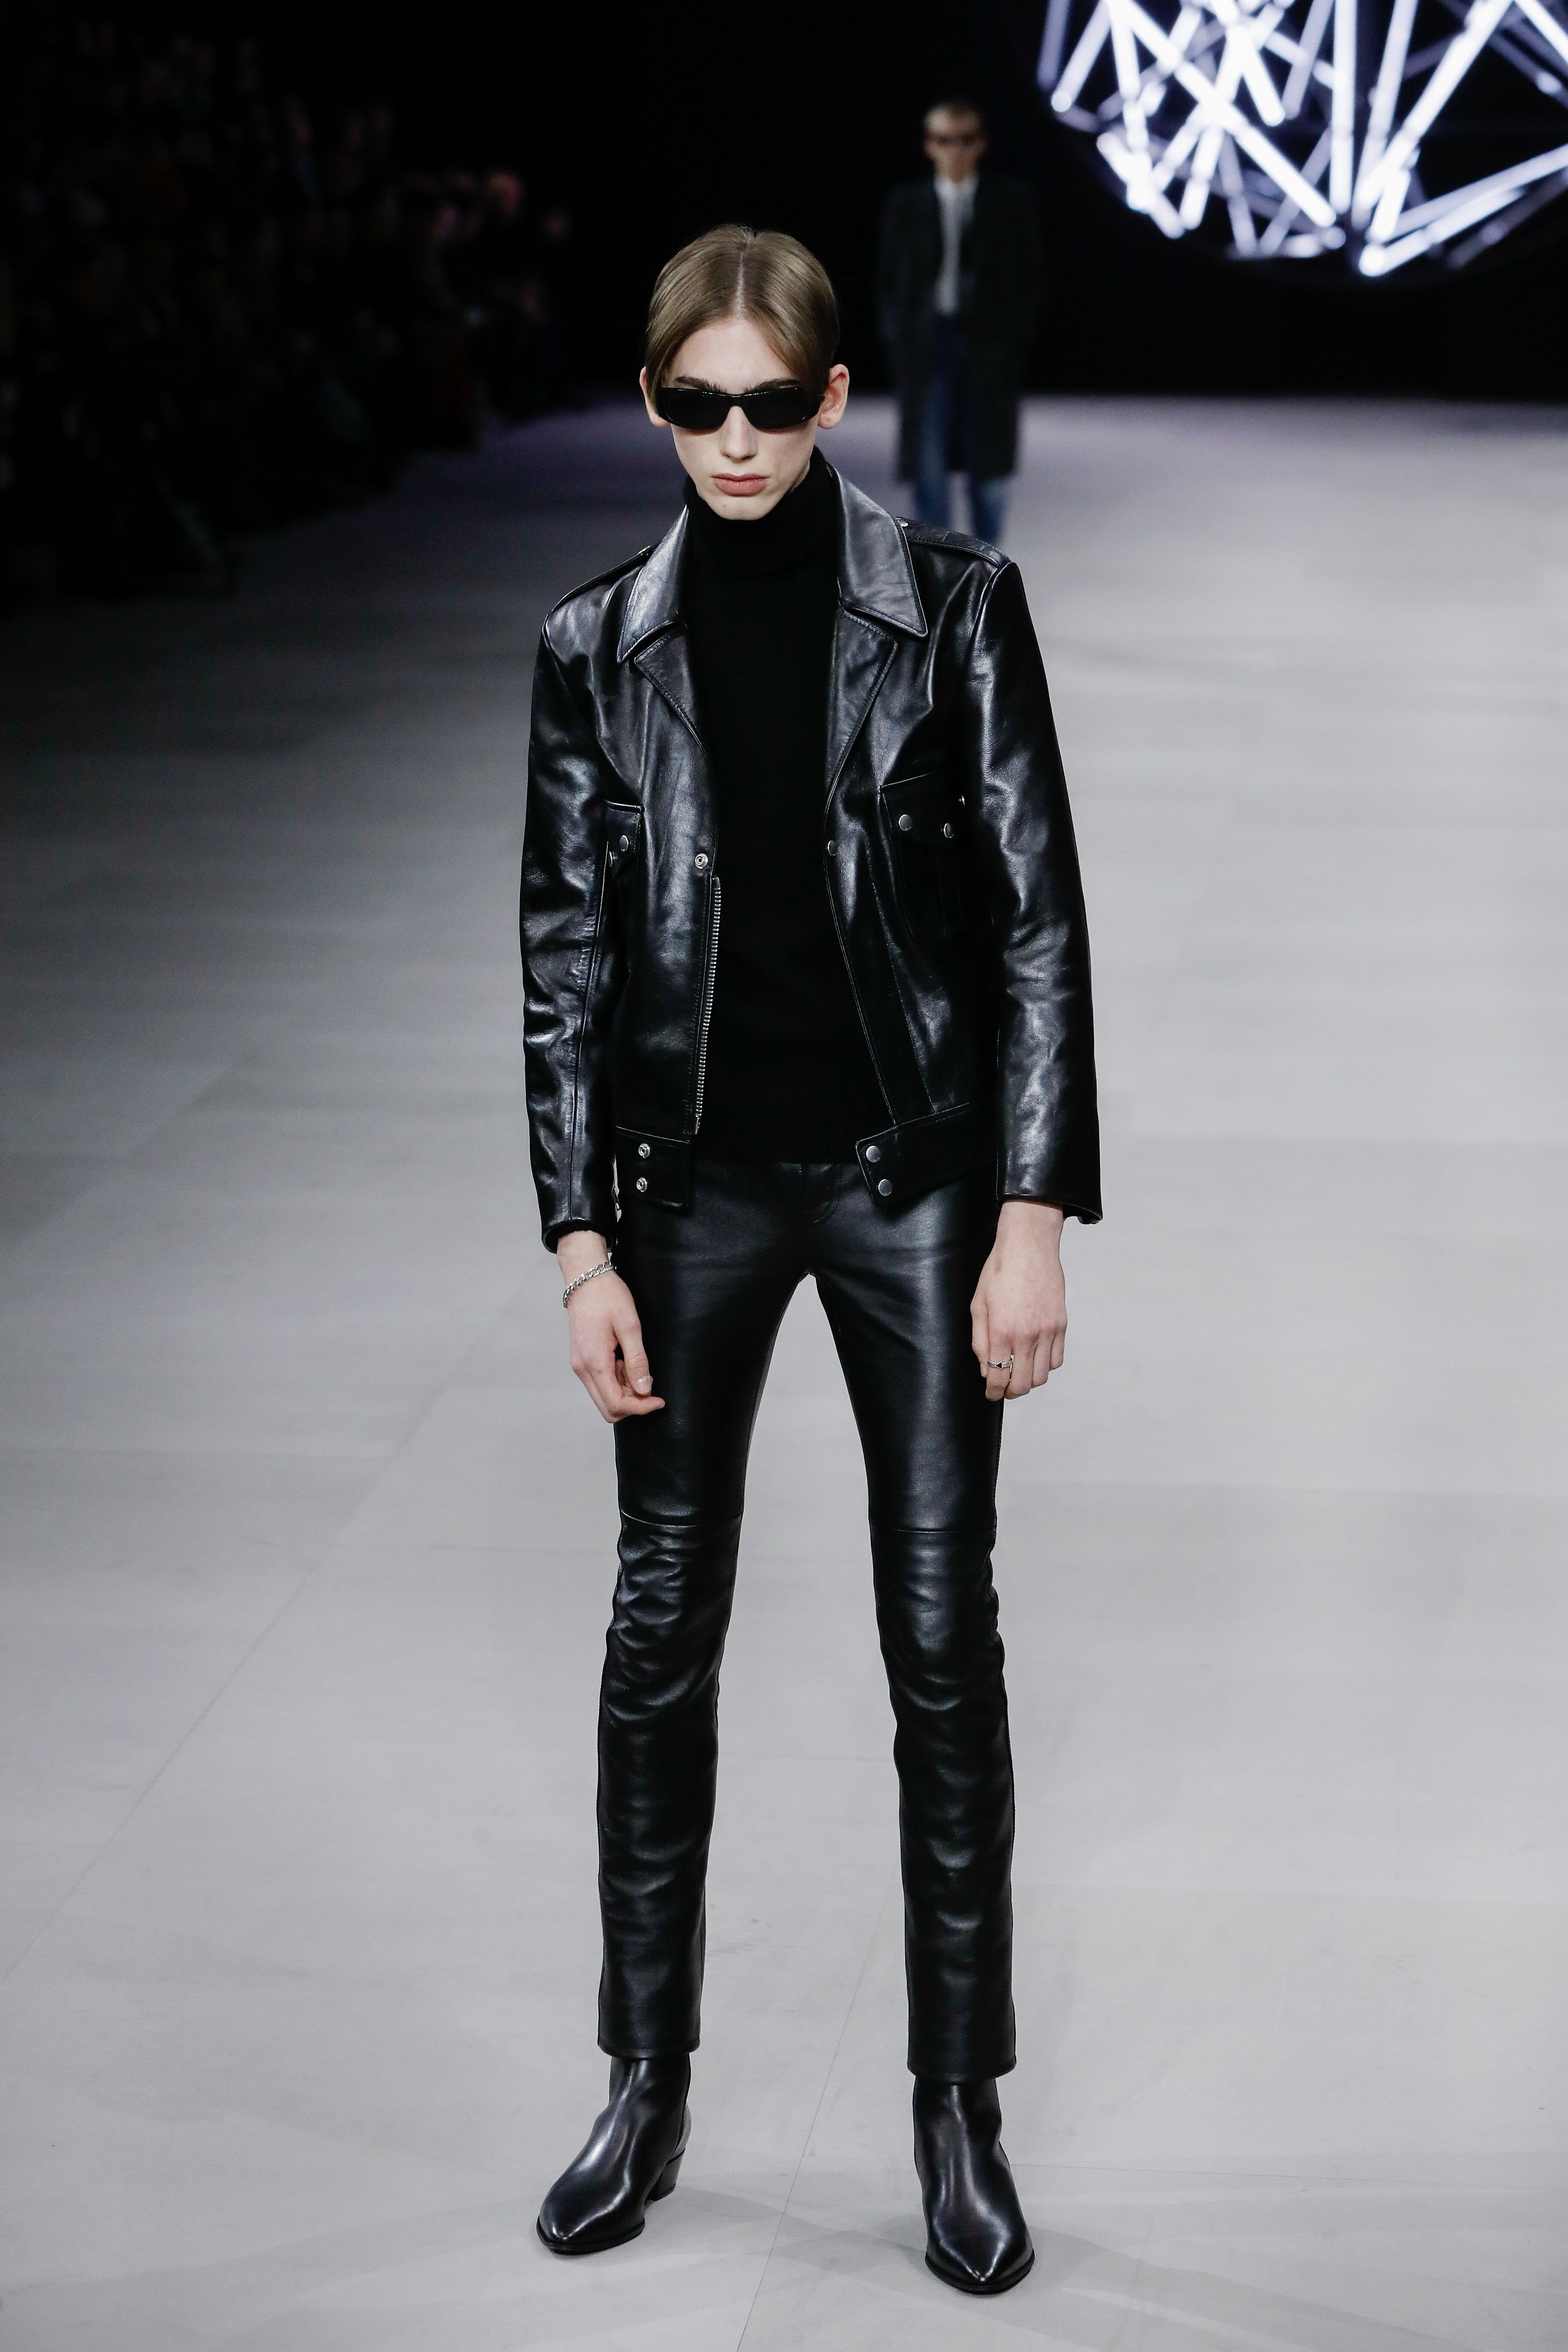 Paris Fashion Week: Hedi Slimane cuts a dash with his skinny